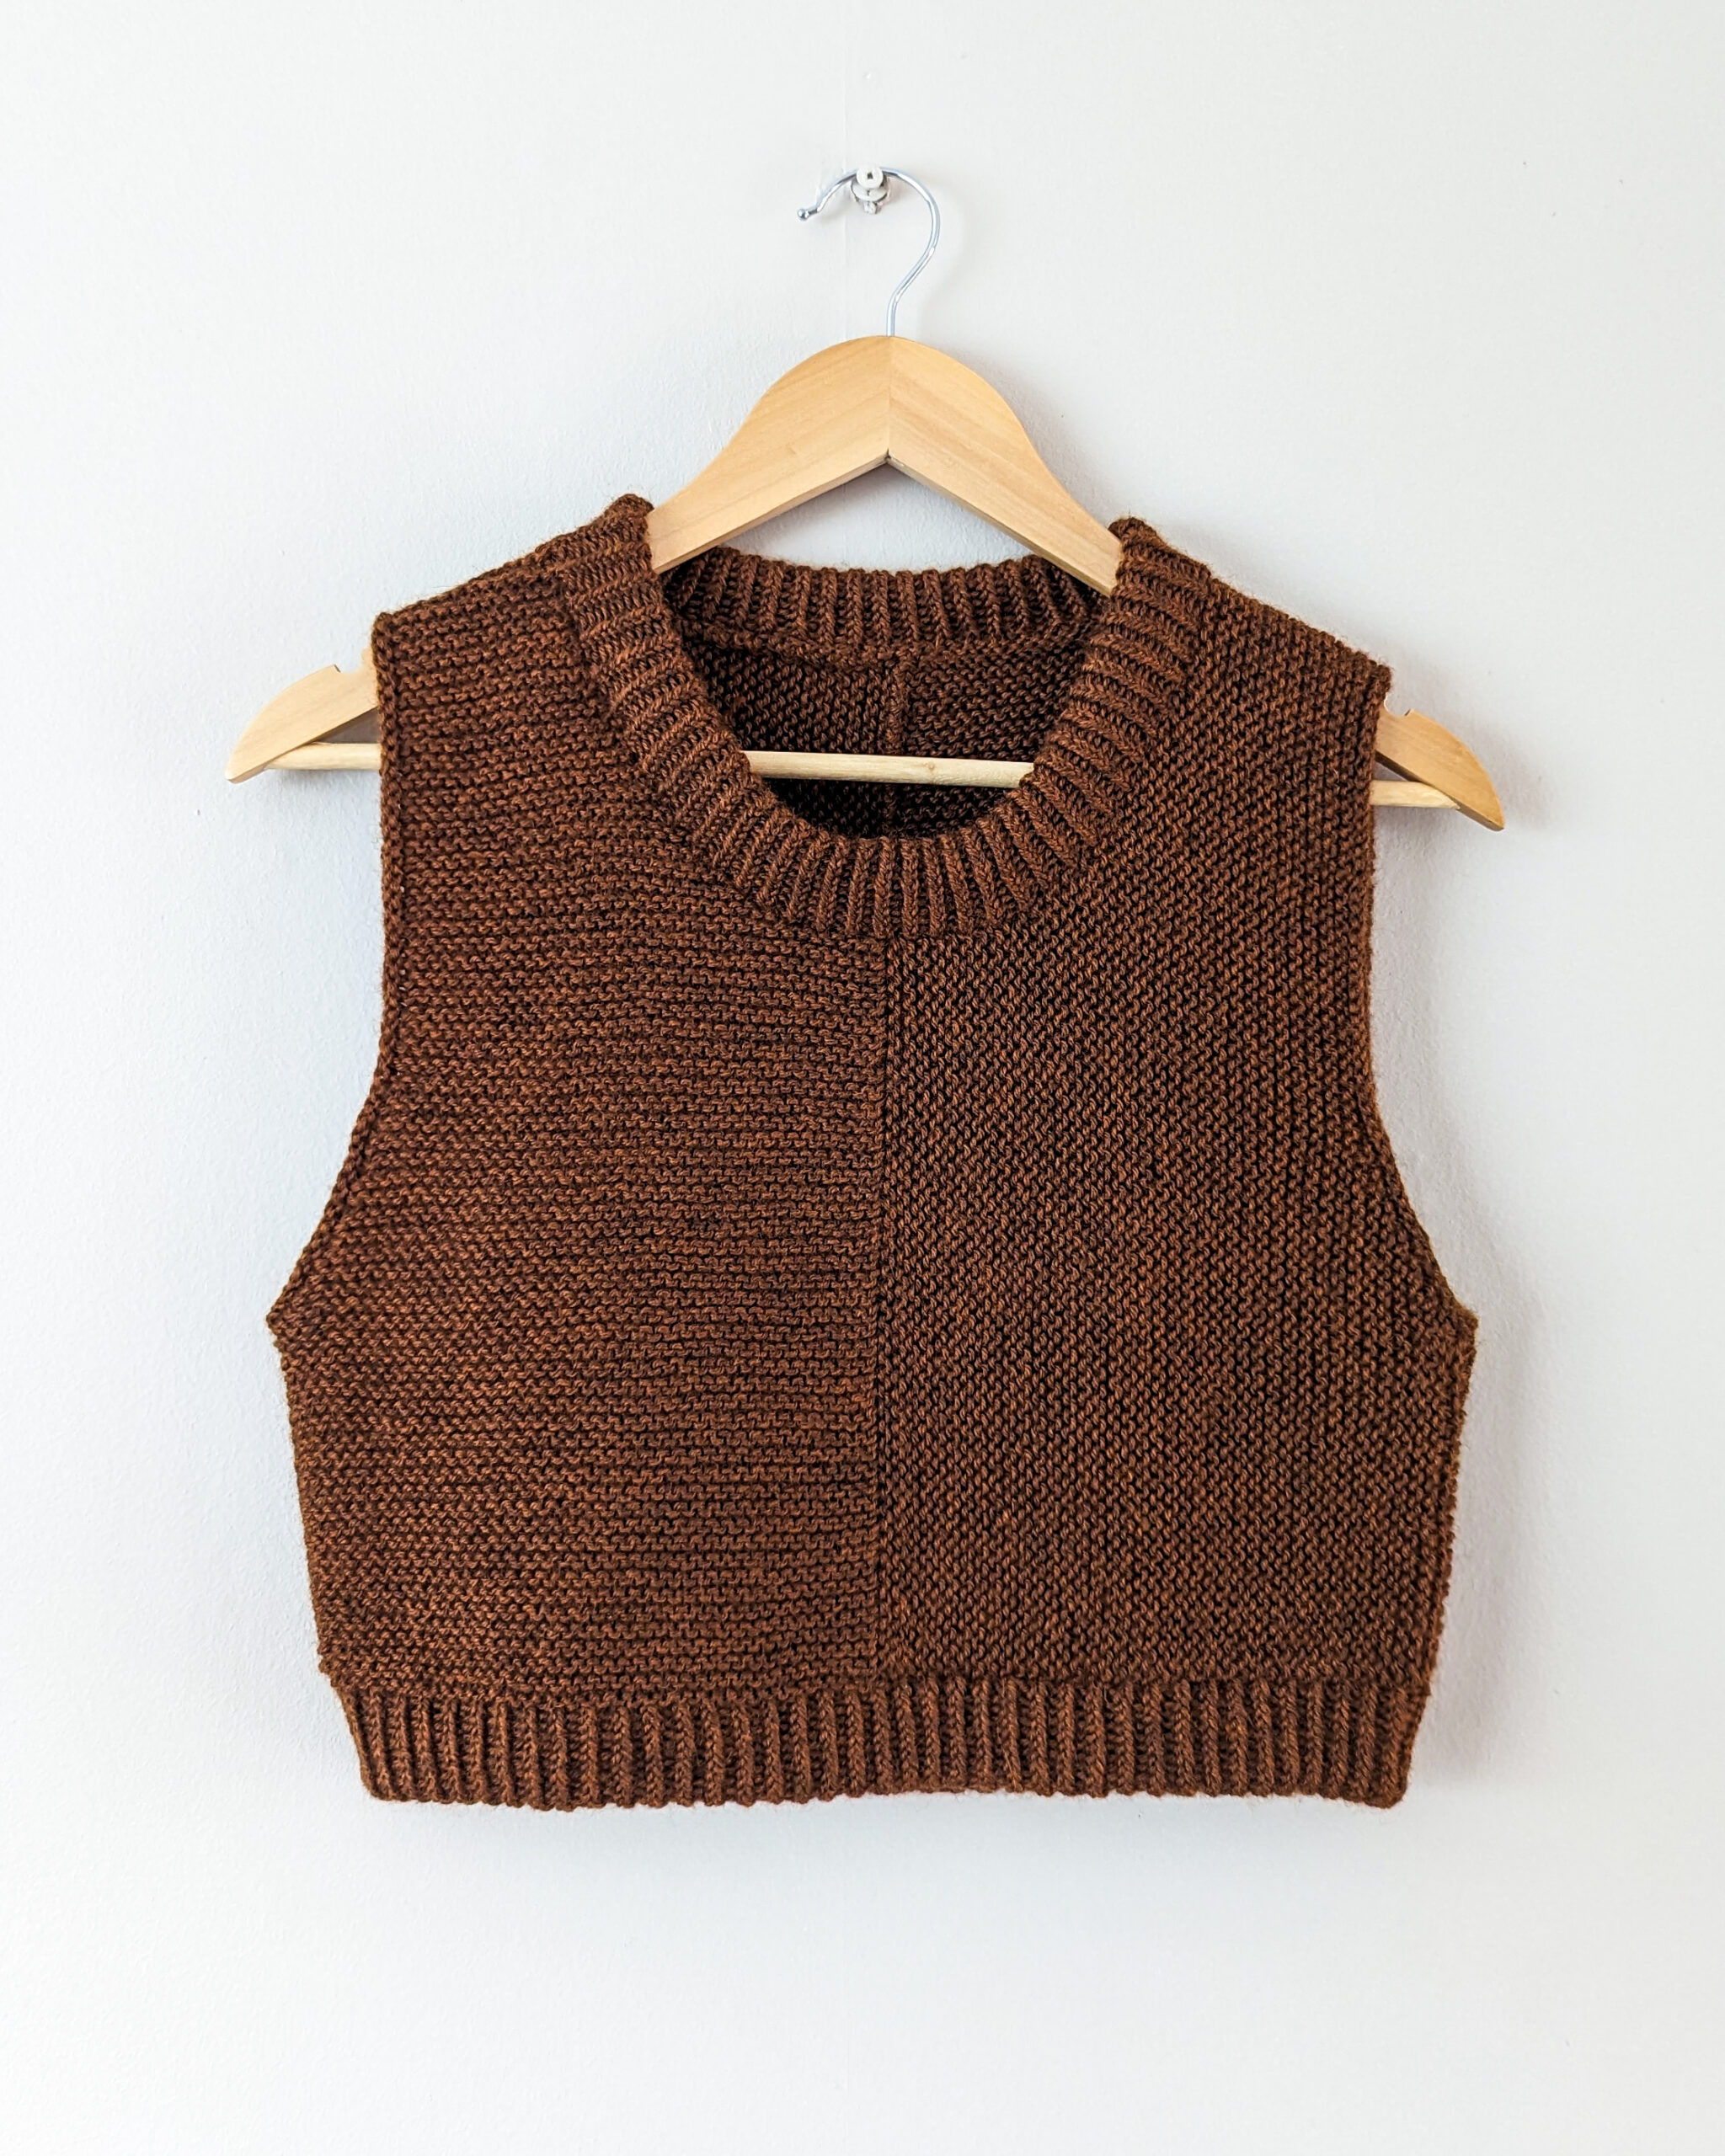 Tetra Slipover Knitting Pattern by Rachel Costello